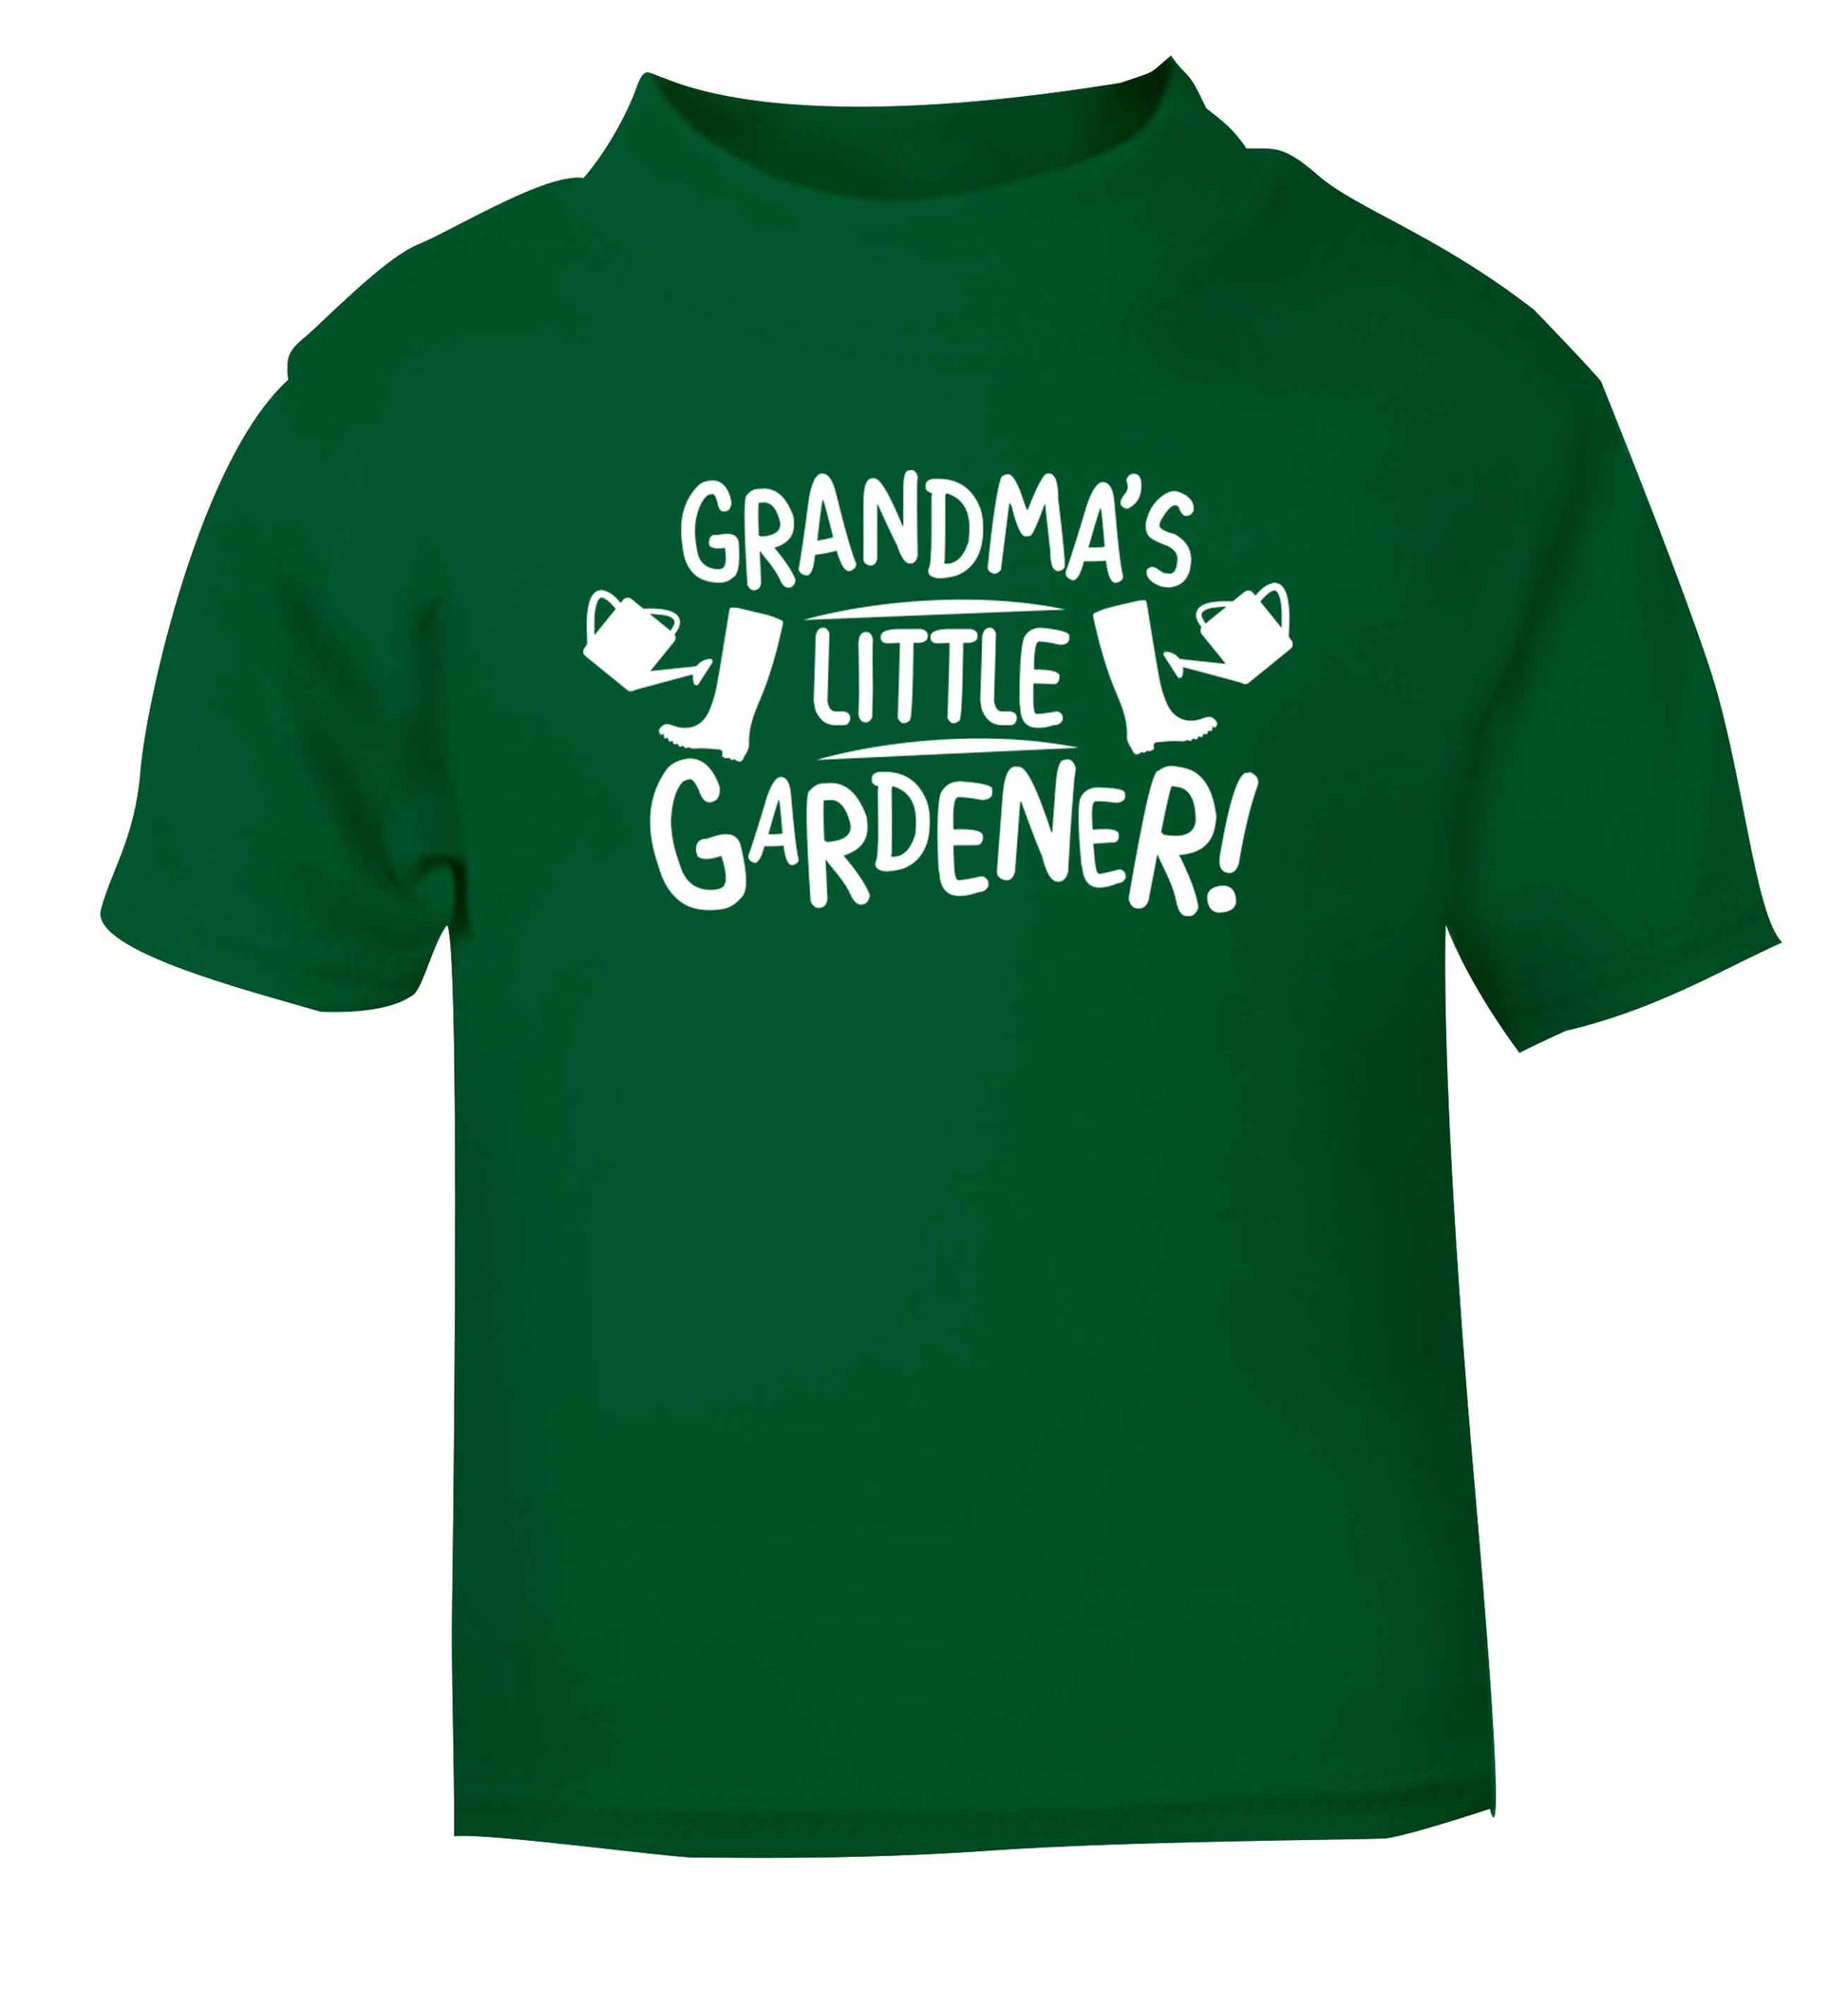 Grandma's little gardener green Baby Toddler Tshirt 2 Years